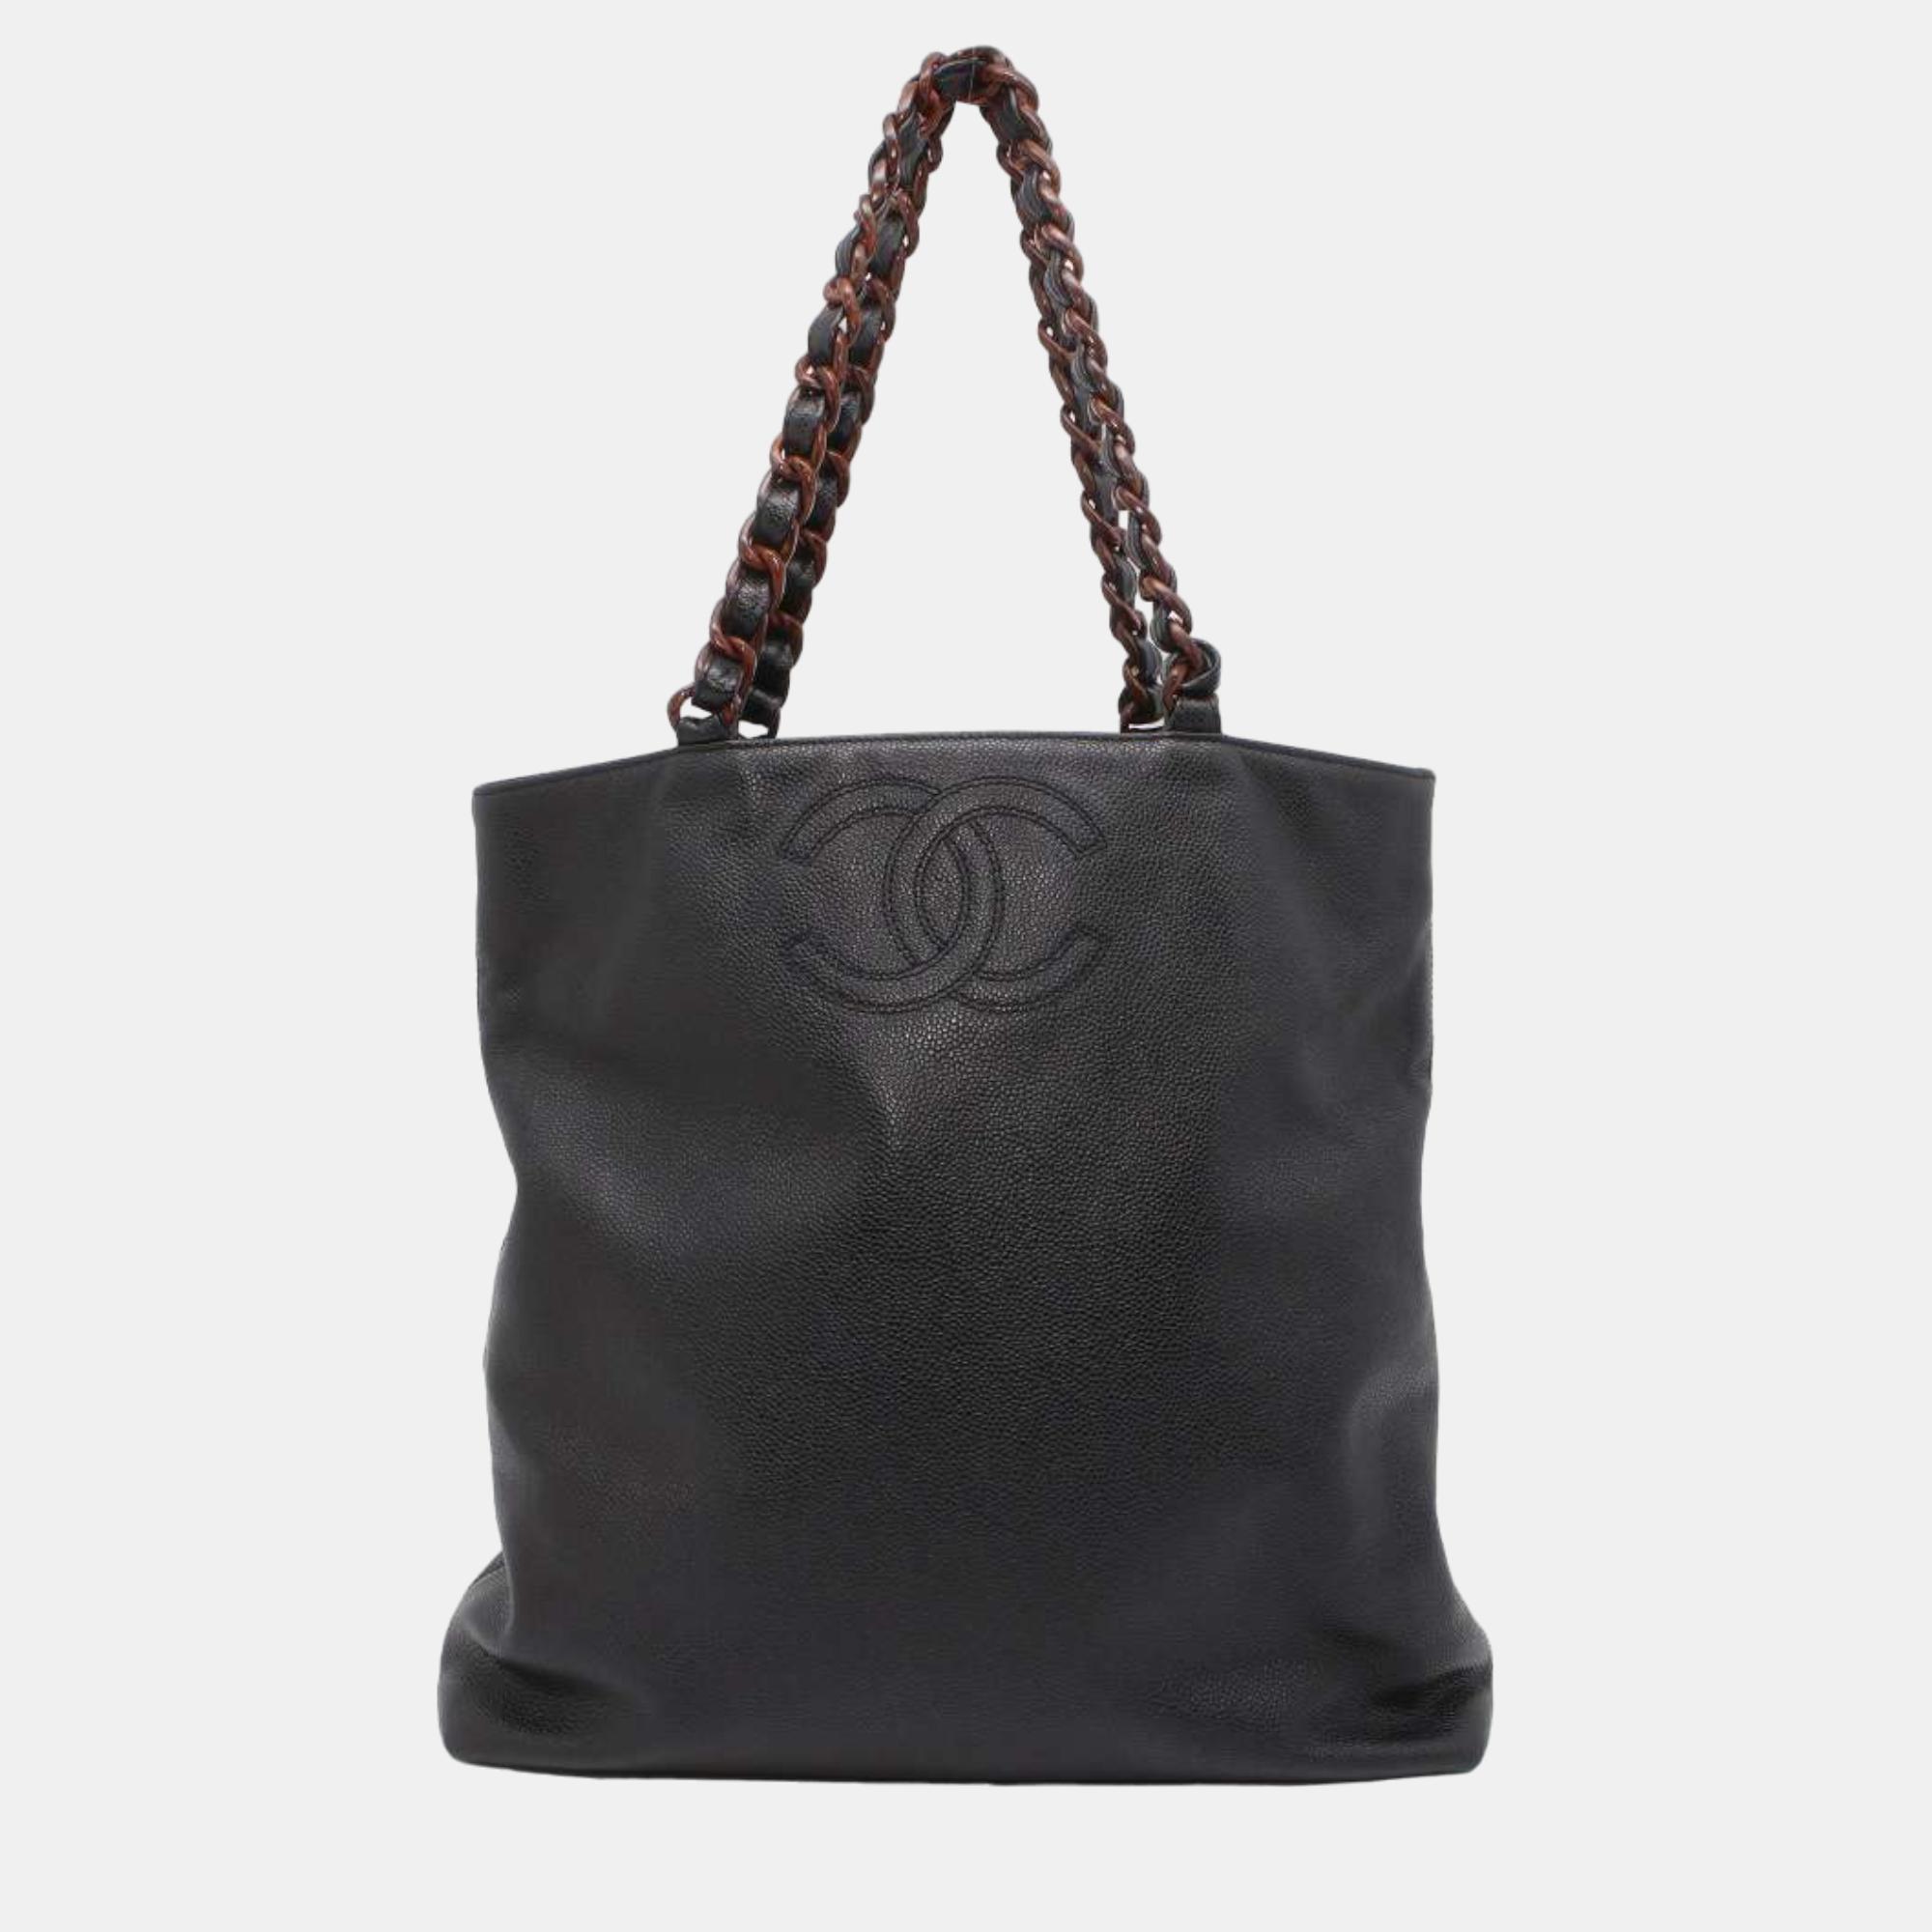 

Chanel Black Leather CC Chain Tote Bag